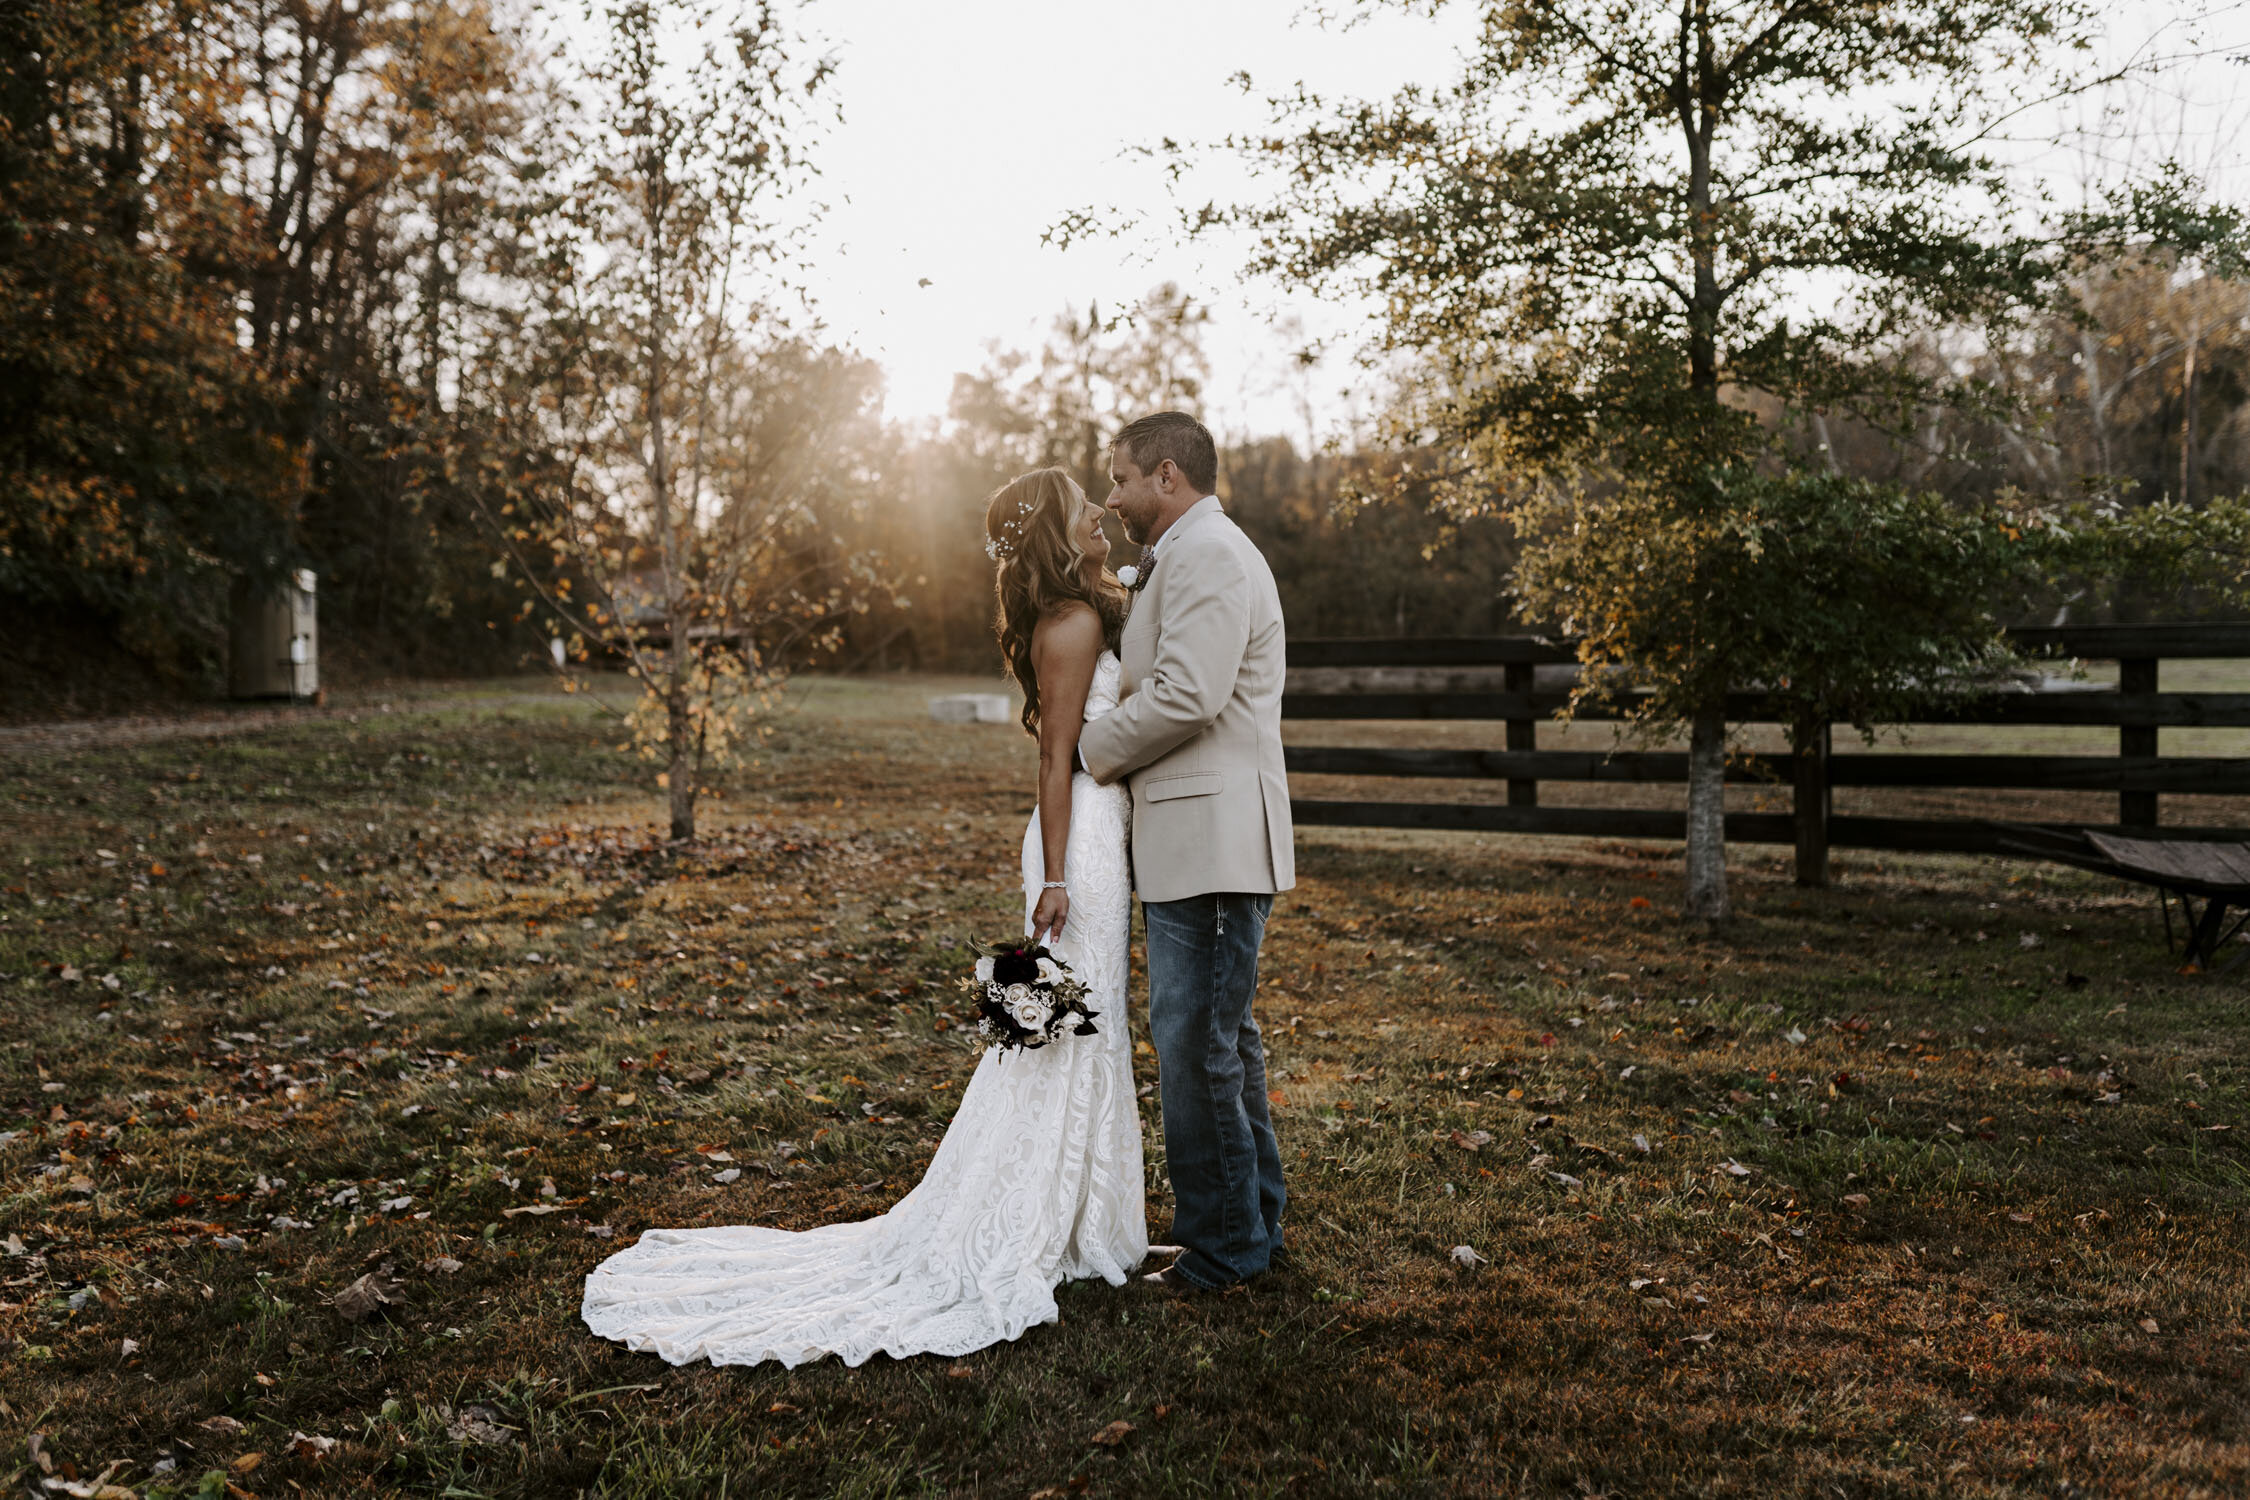 Fall Bride and Groom Portraits at Winston-Salem Farm by Kayli LaFon Photography | Greensboro, NC Wedding Photographer